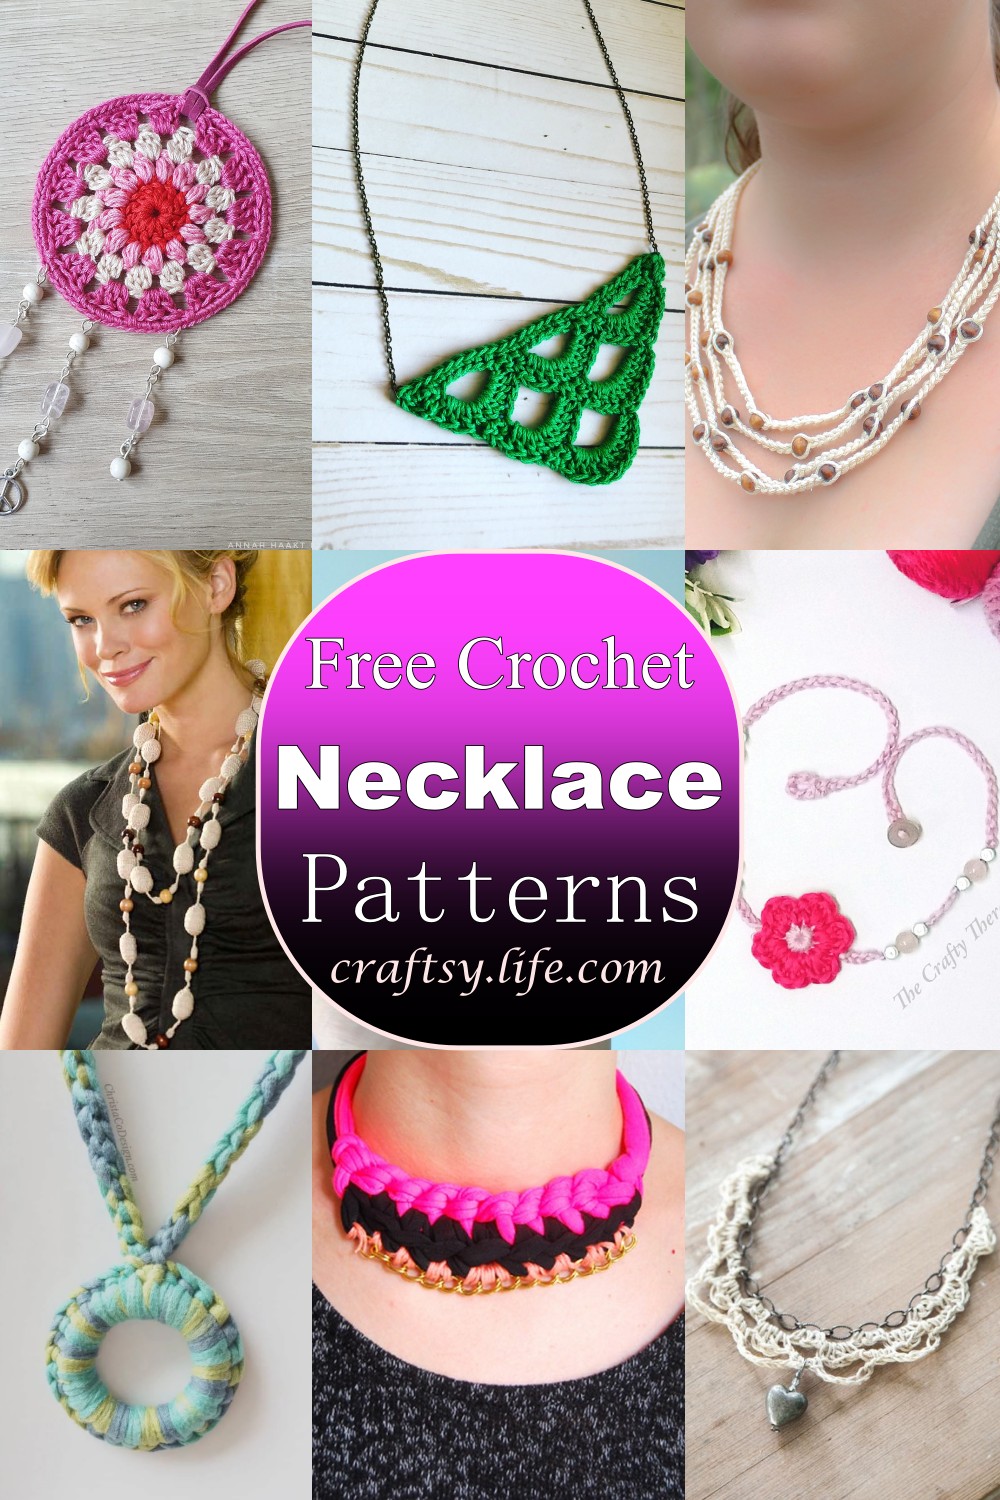 Free Crochet Necklace Patterns